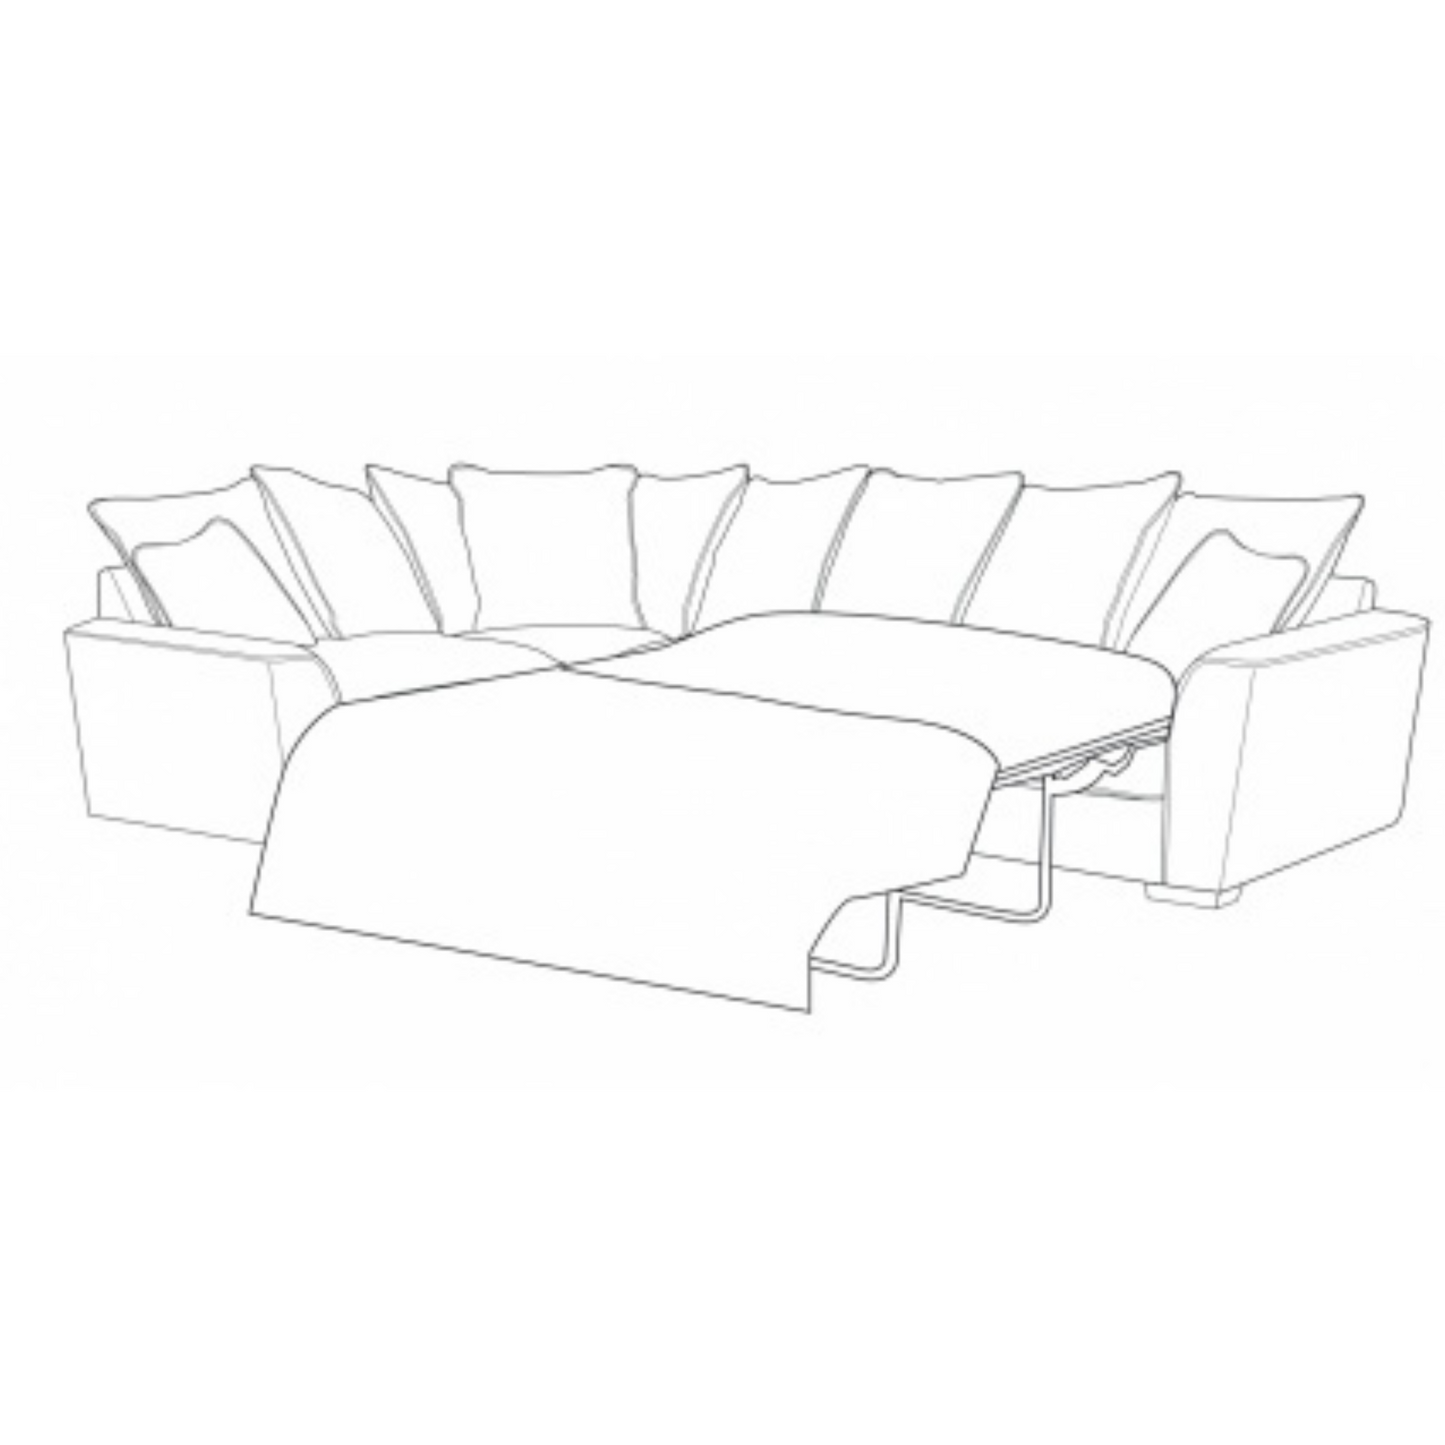 Fantasia 4 Seater Corner Sofa Bed